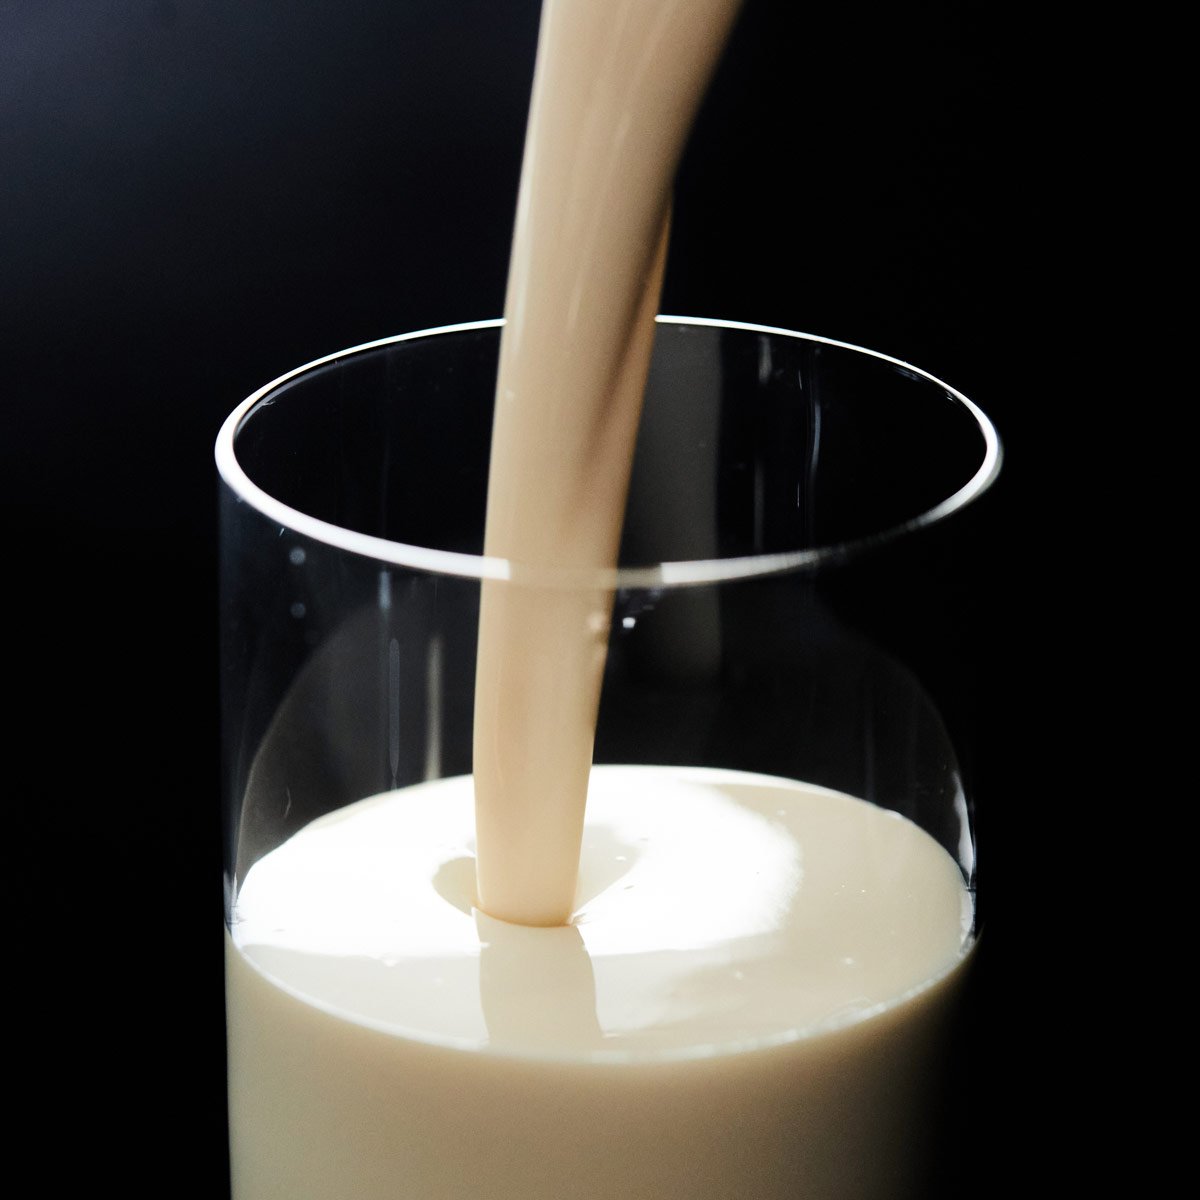 Pouring PURIS non-dairy milk